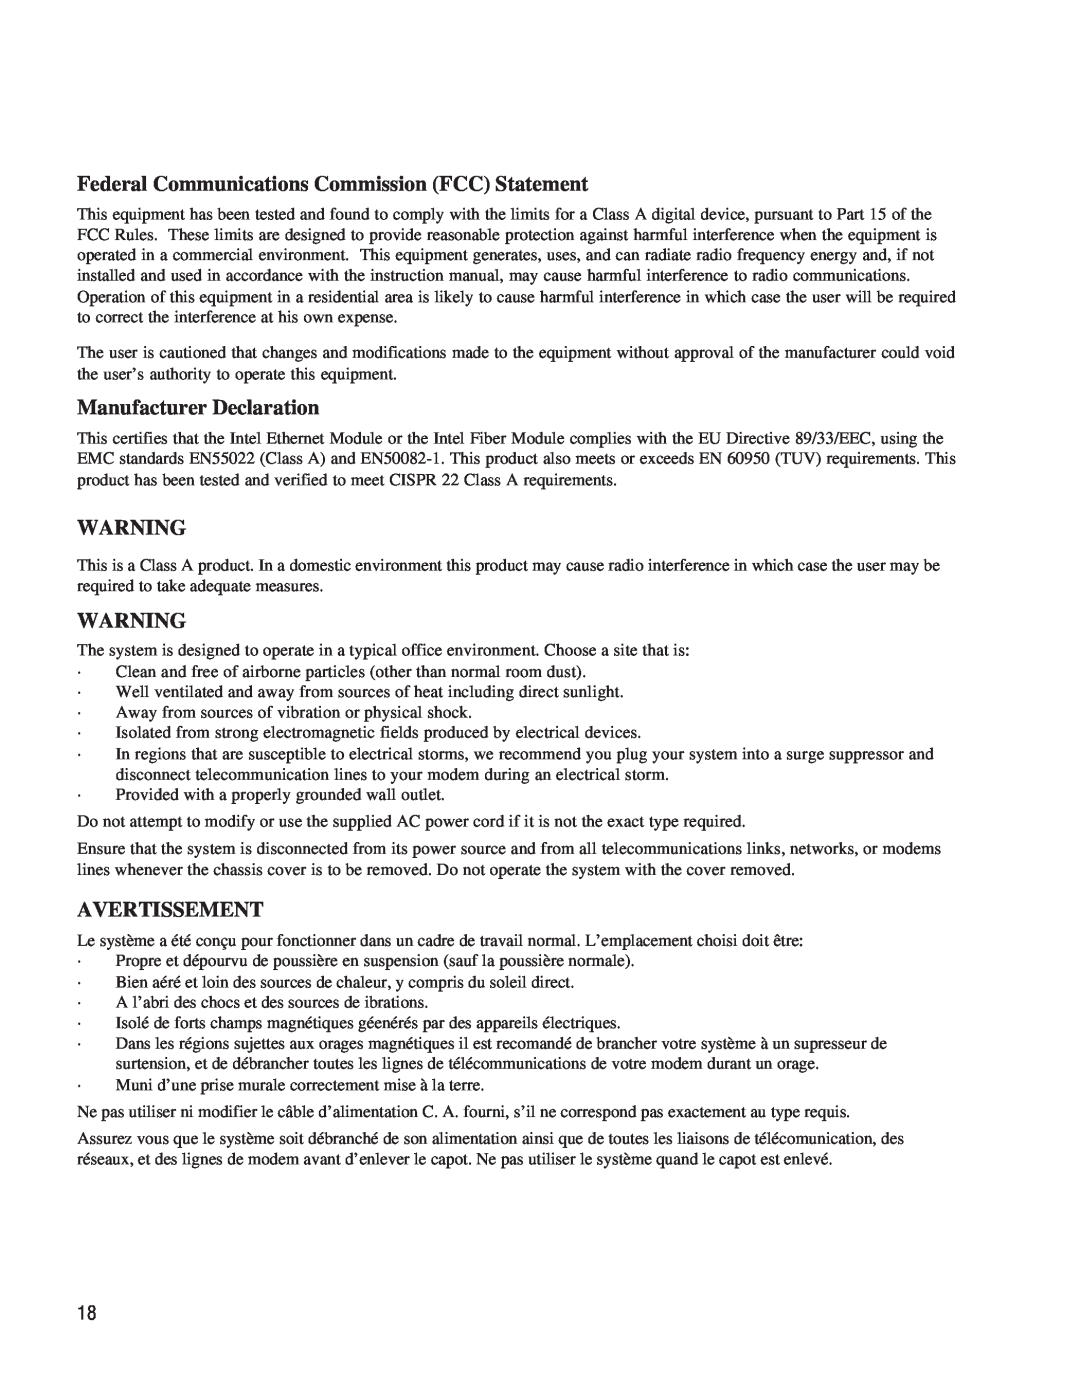 Intel EE110EM manual Federal Communications Commission FCC Statement, Manufacturer Declaration, Avertissement 